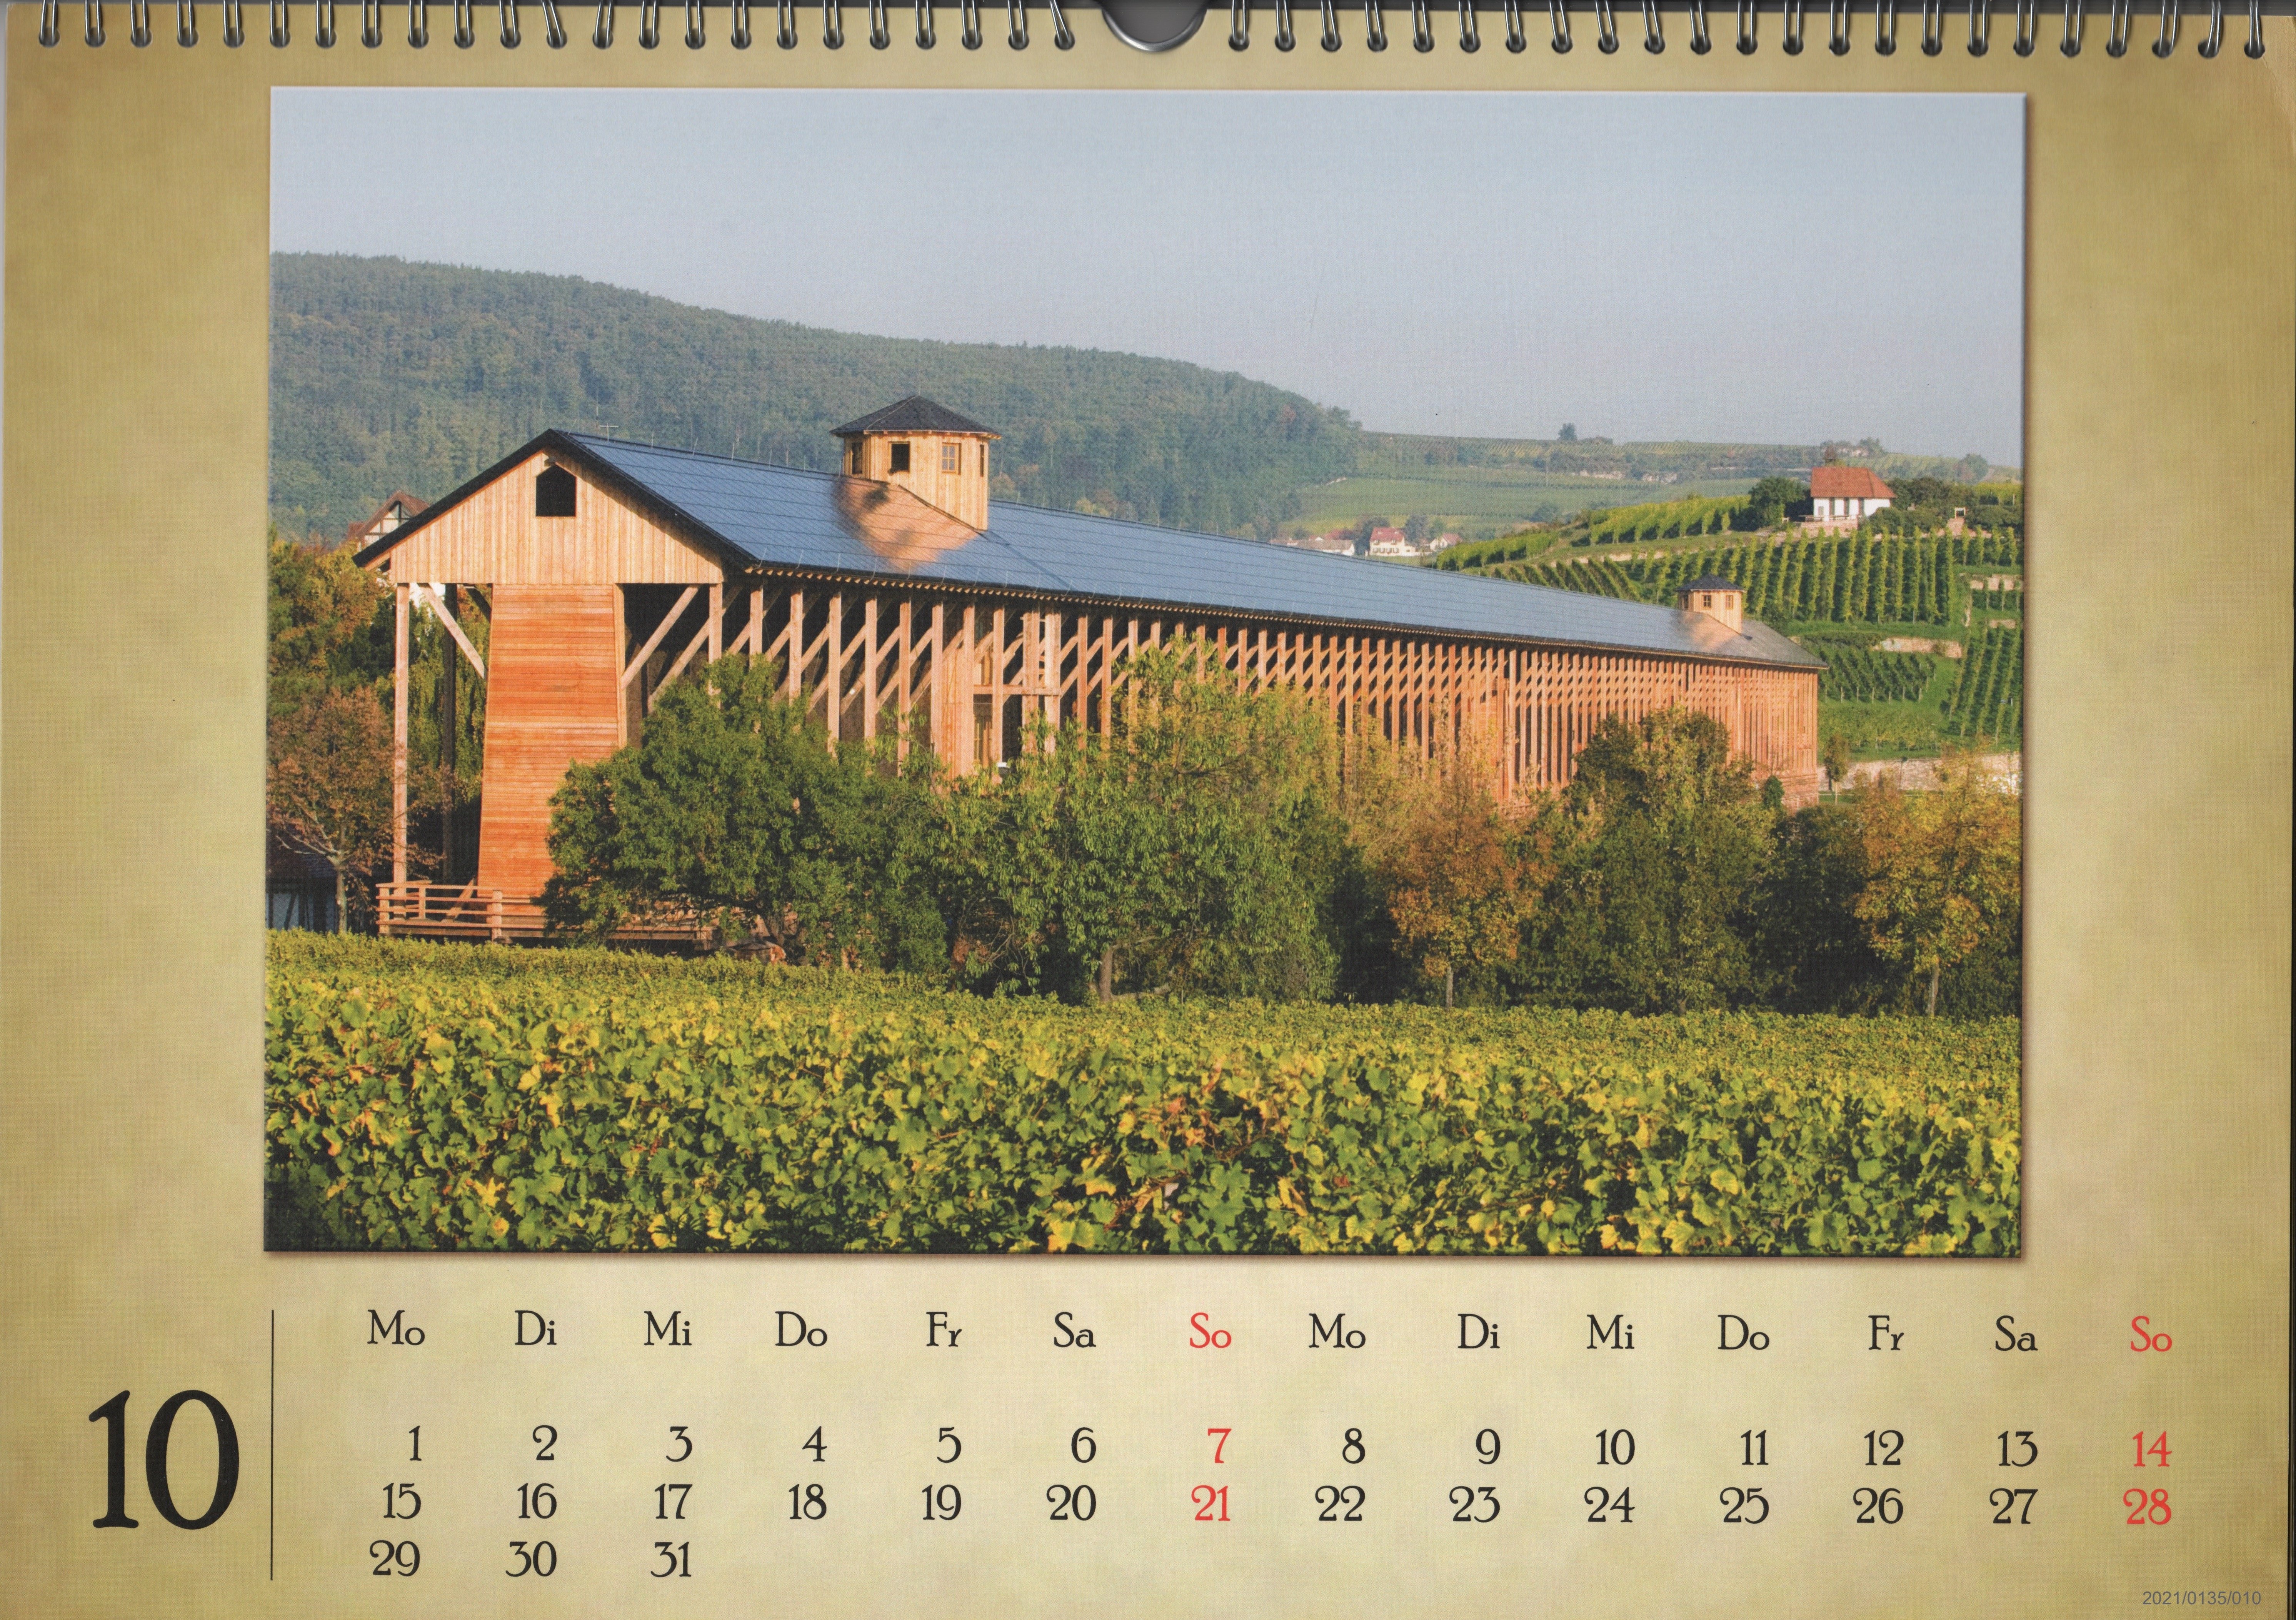 Unser Gradierbau Kalender 2012: Monat Oktober (Museumsgesellschaft Bad Dürkheim e. V. CC BY-NC-SA)